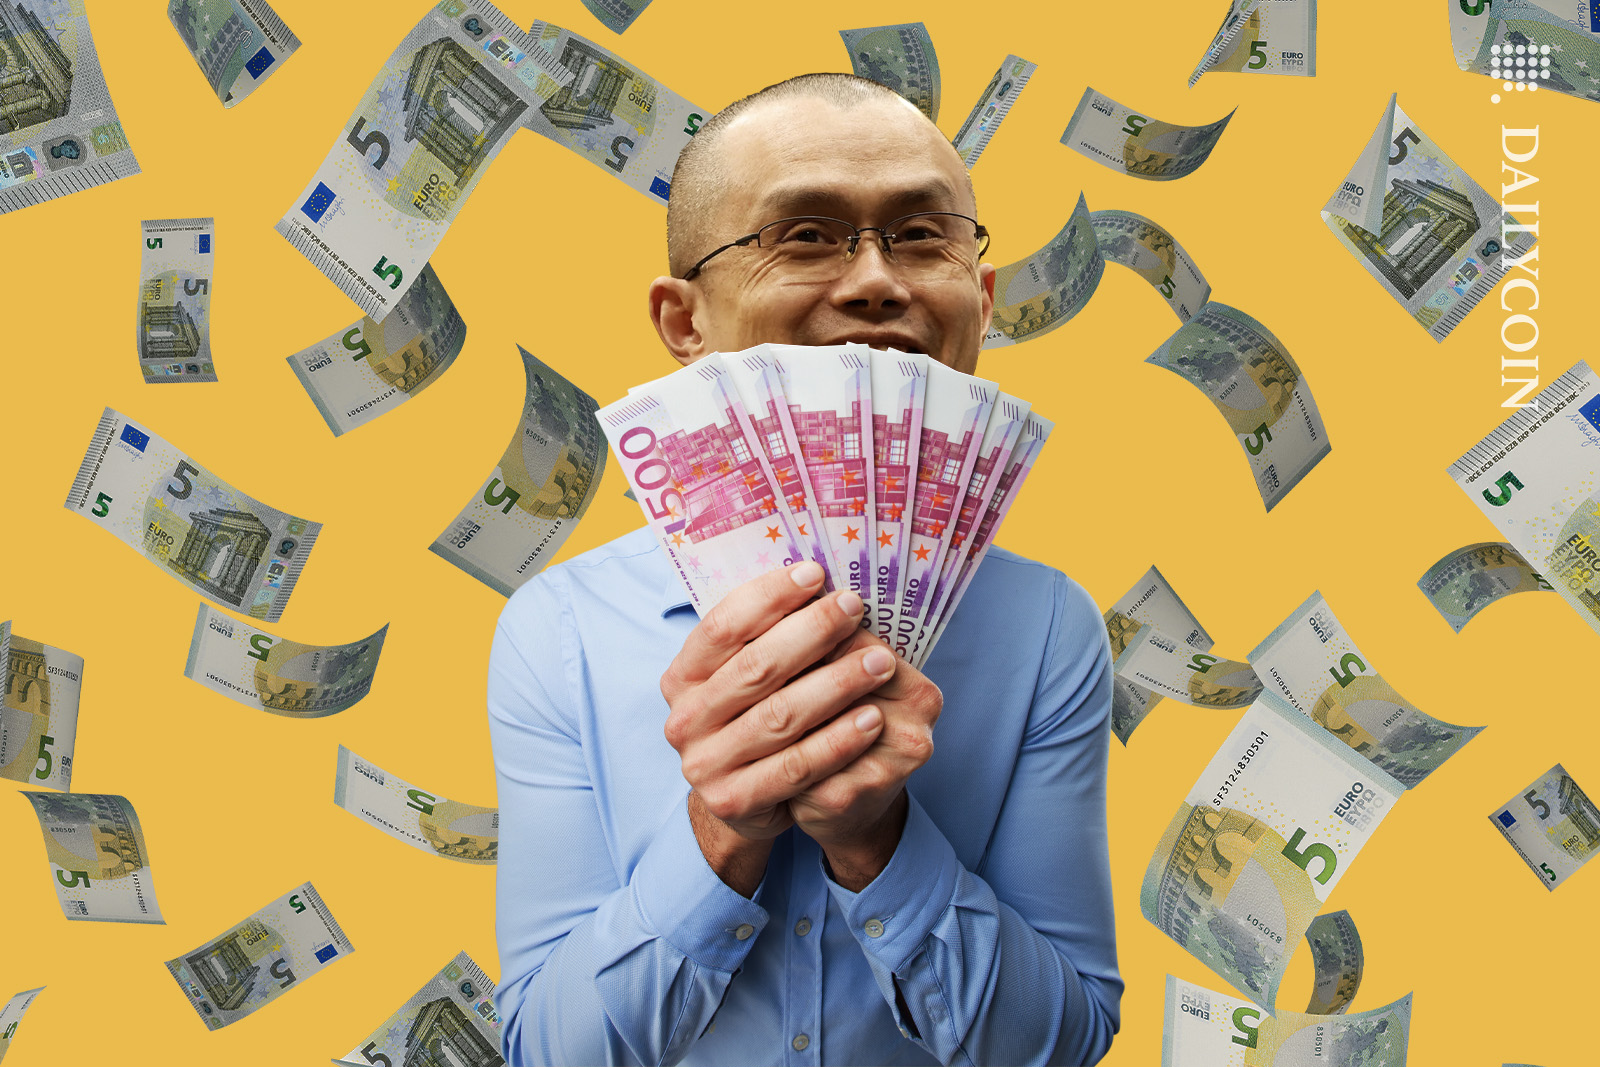 Changpeng Zhao smiling from behind a fan of 500 euro bills.